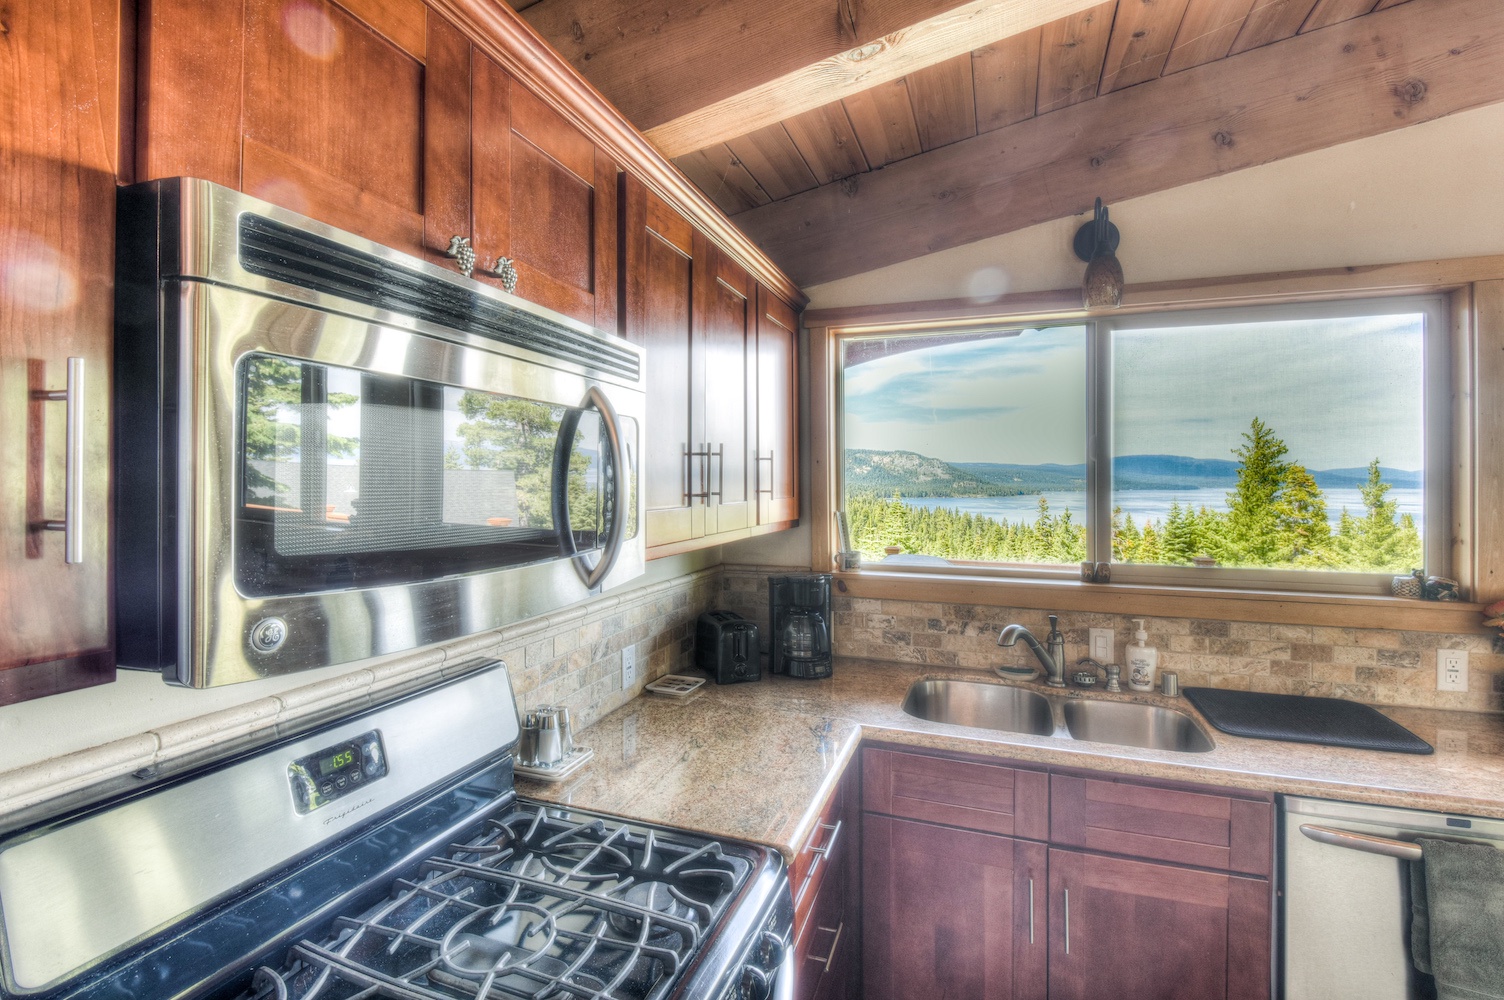 Full kitchen with lake views